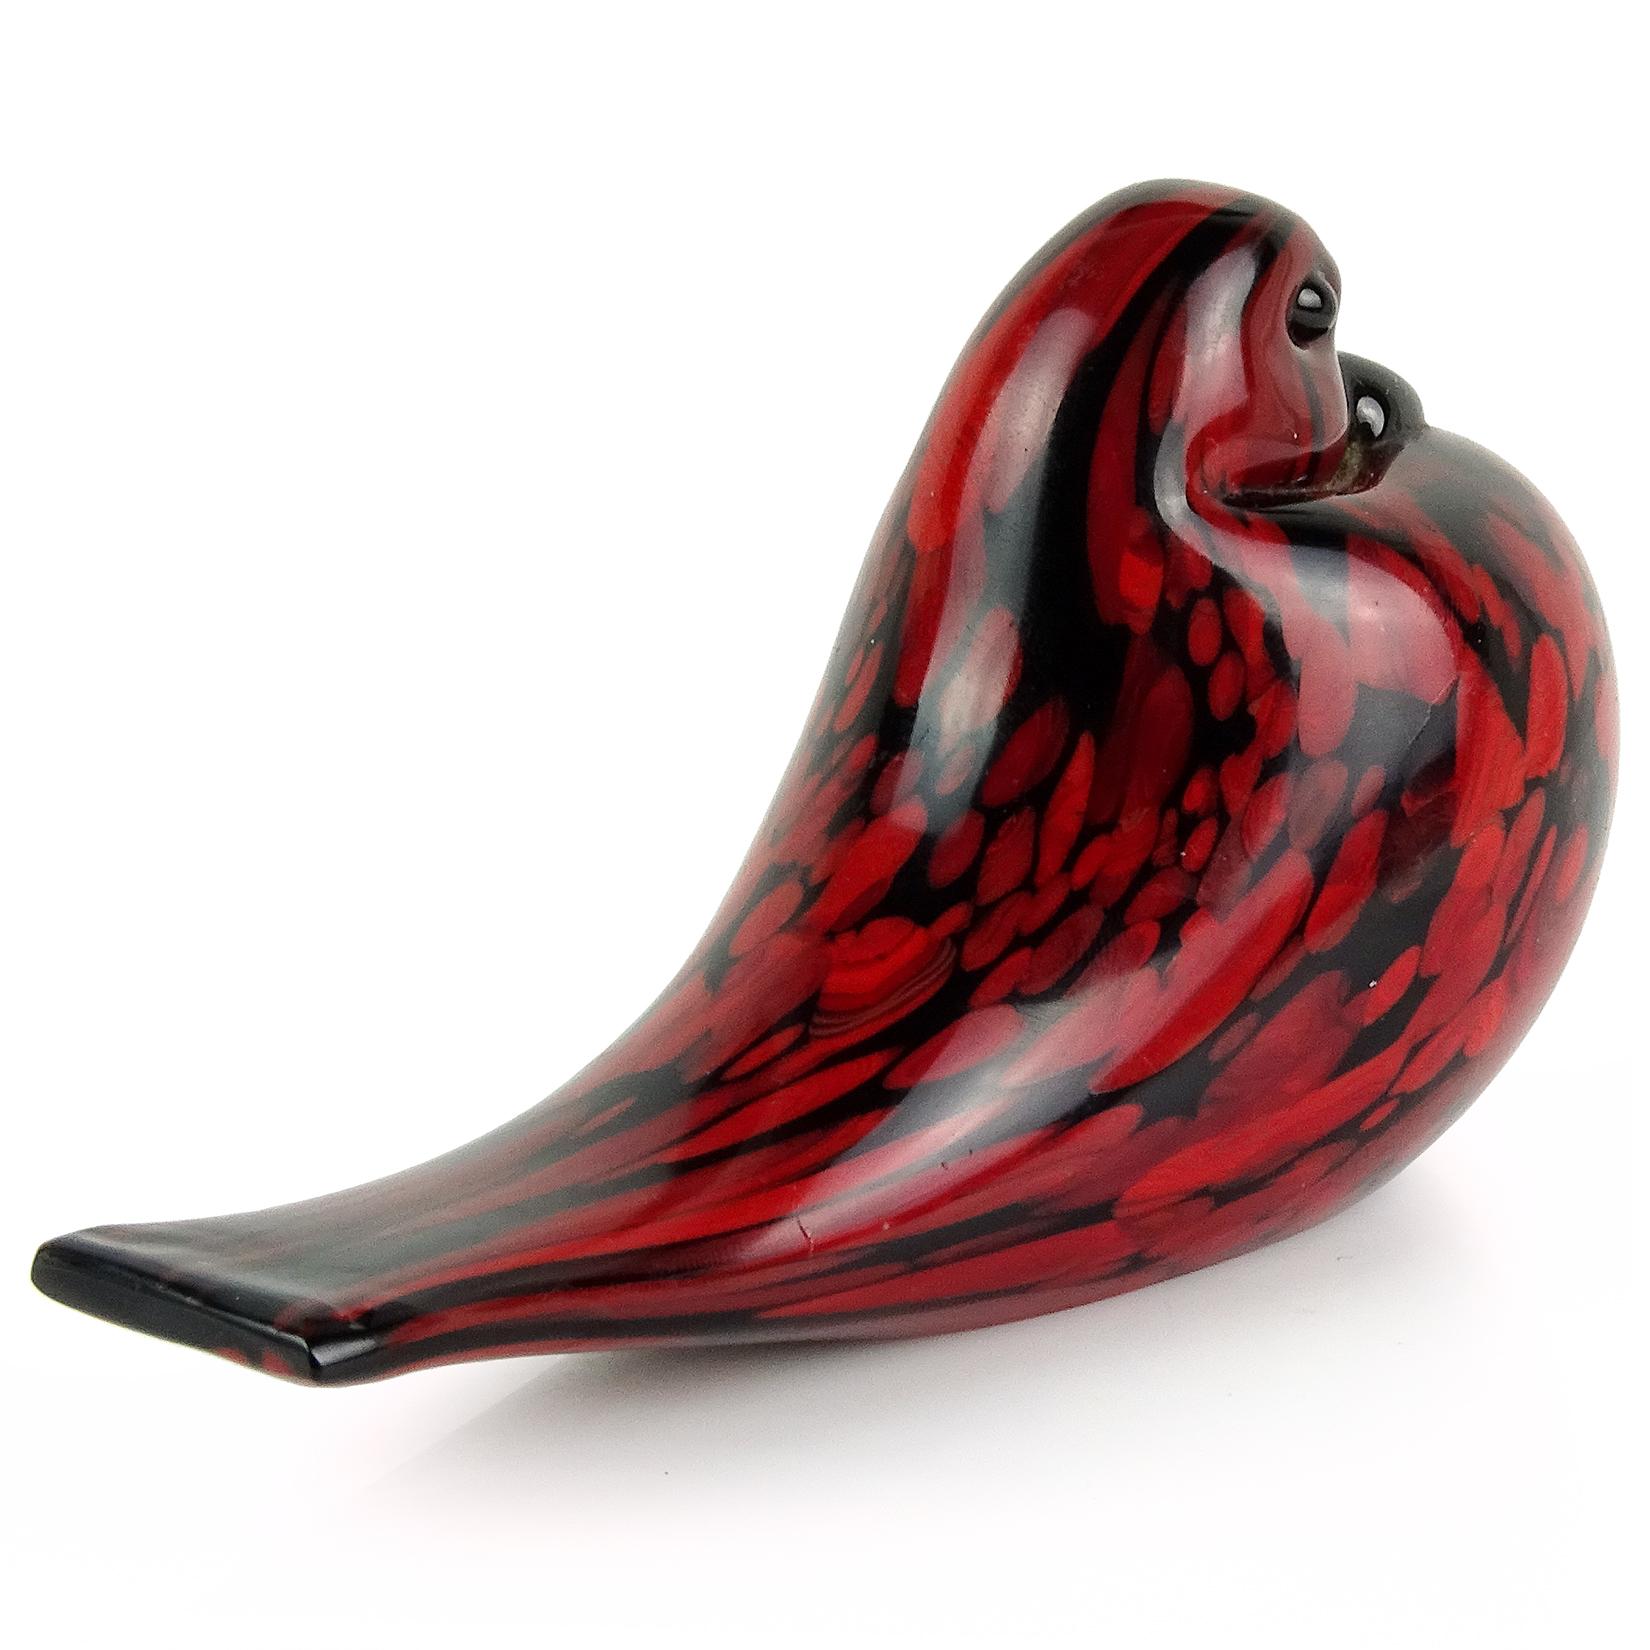 Rare and beautiful vintage Murano hand blown red and black Italian art glass dove bird figure. Documented to designer Archimede Seguso. It still retains the original 